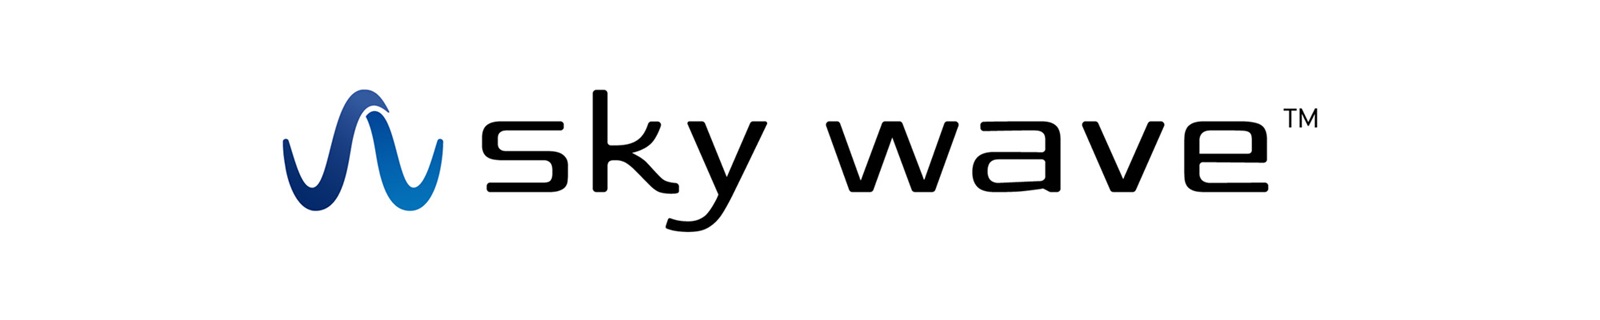 sky wave logo